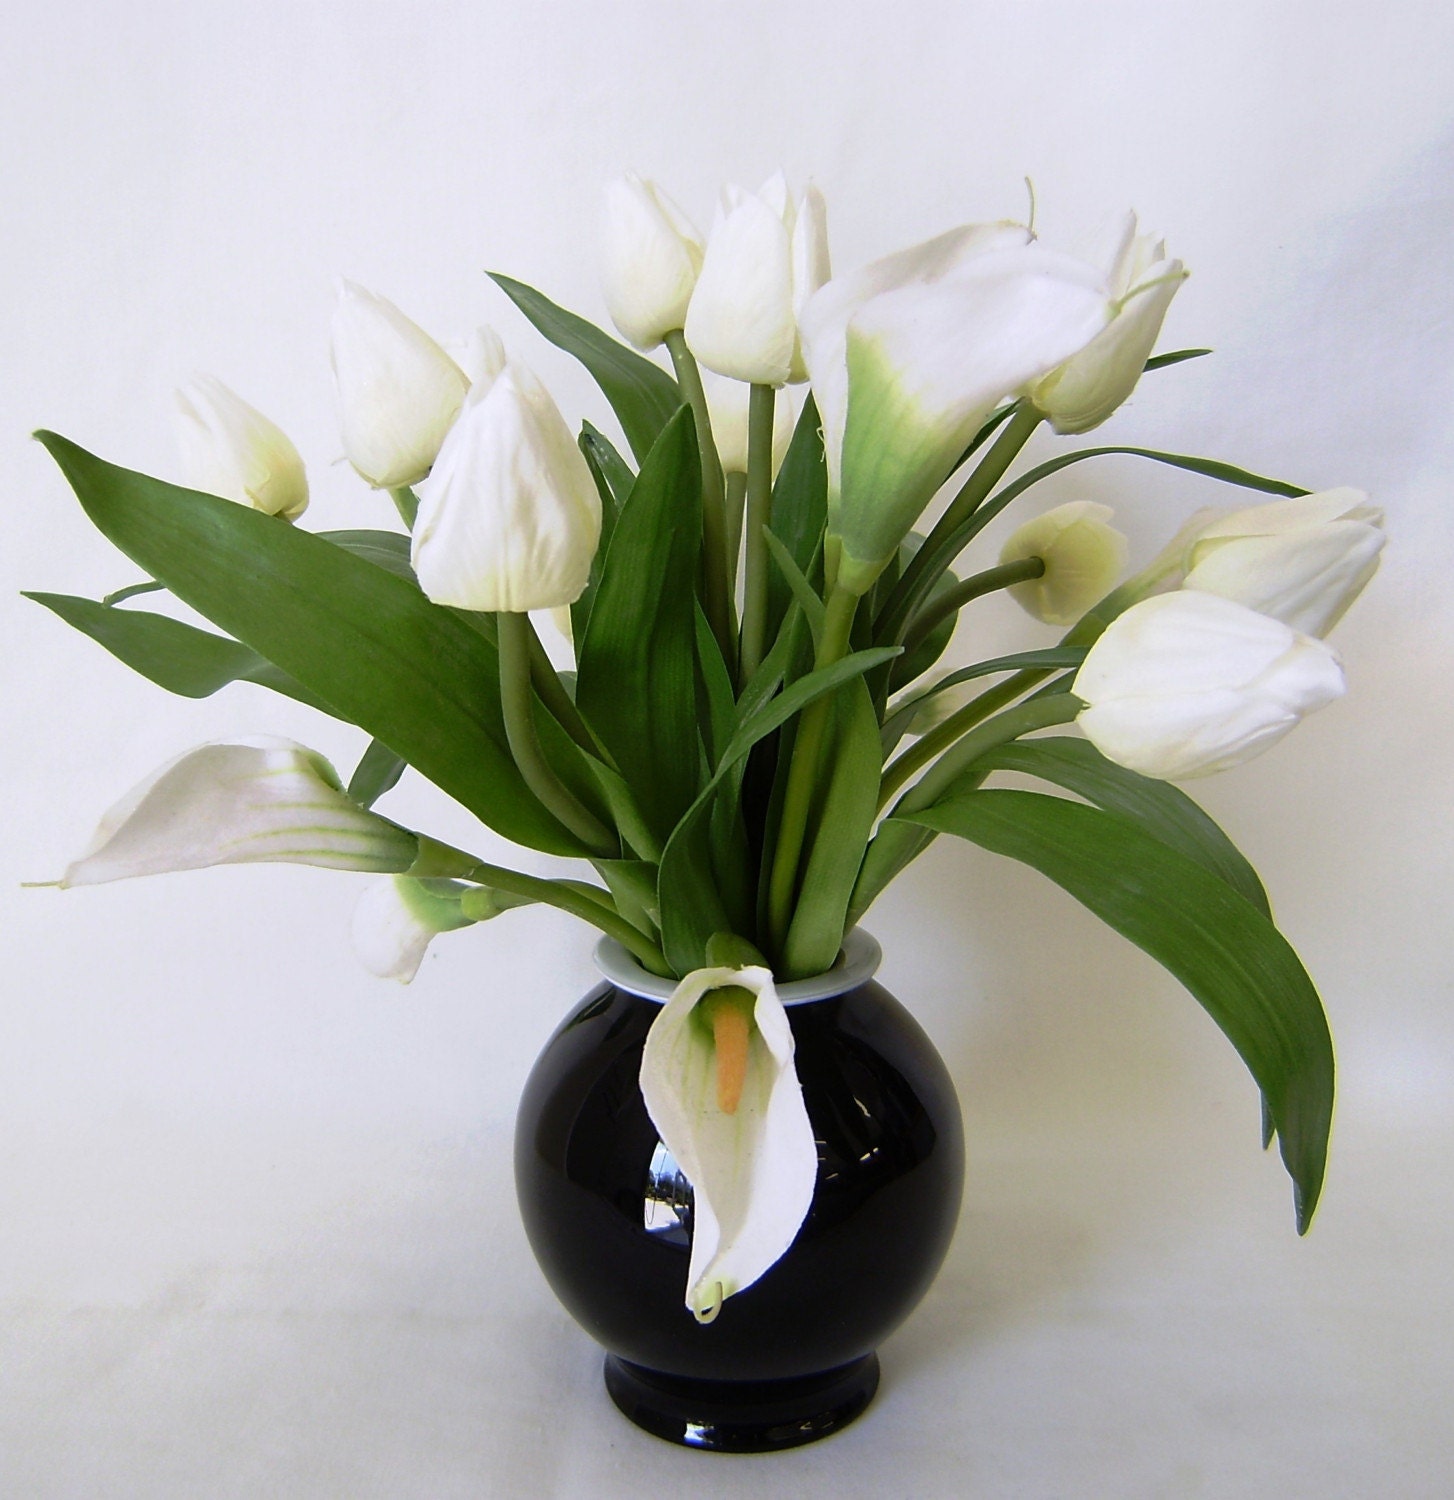 Artificial Tulip Arrangements